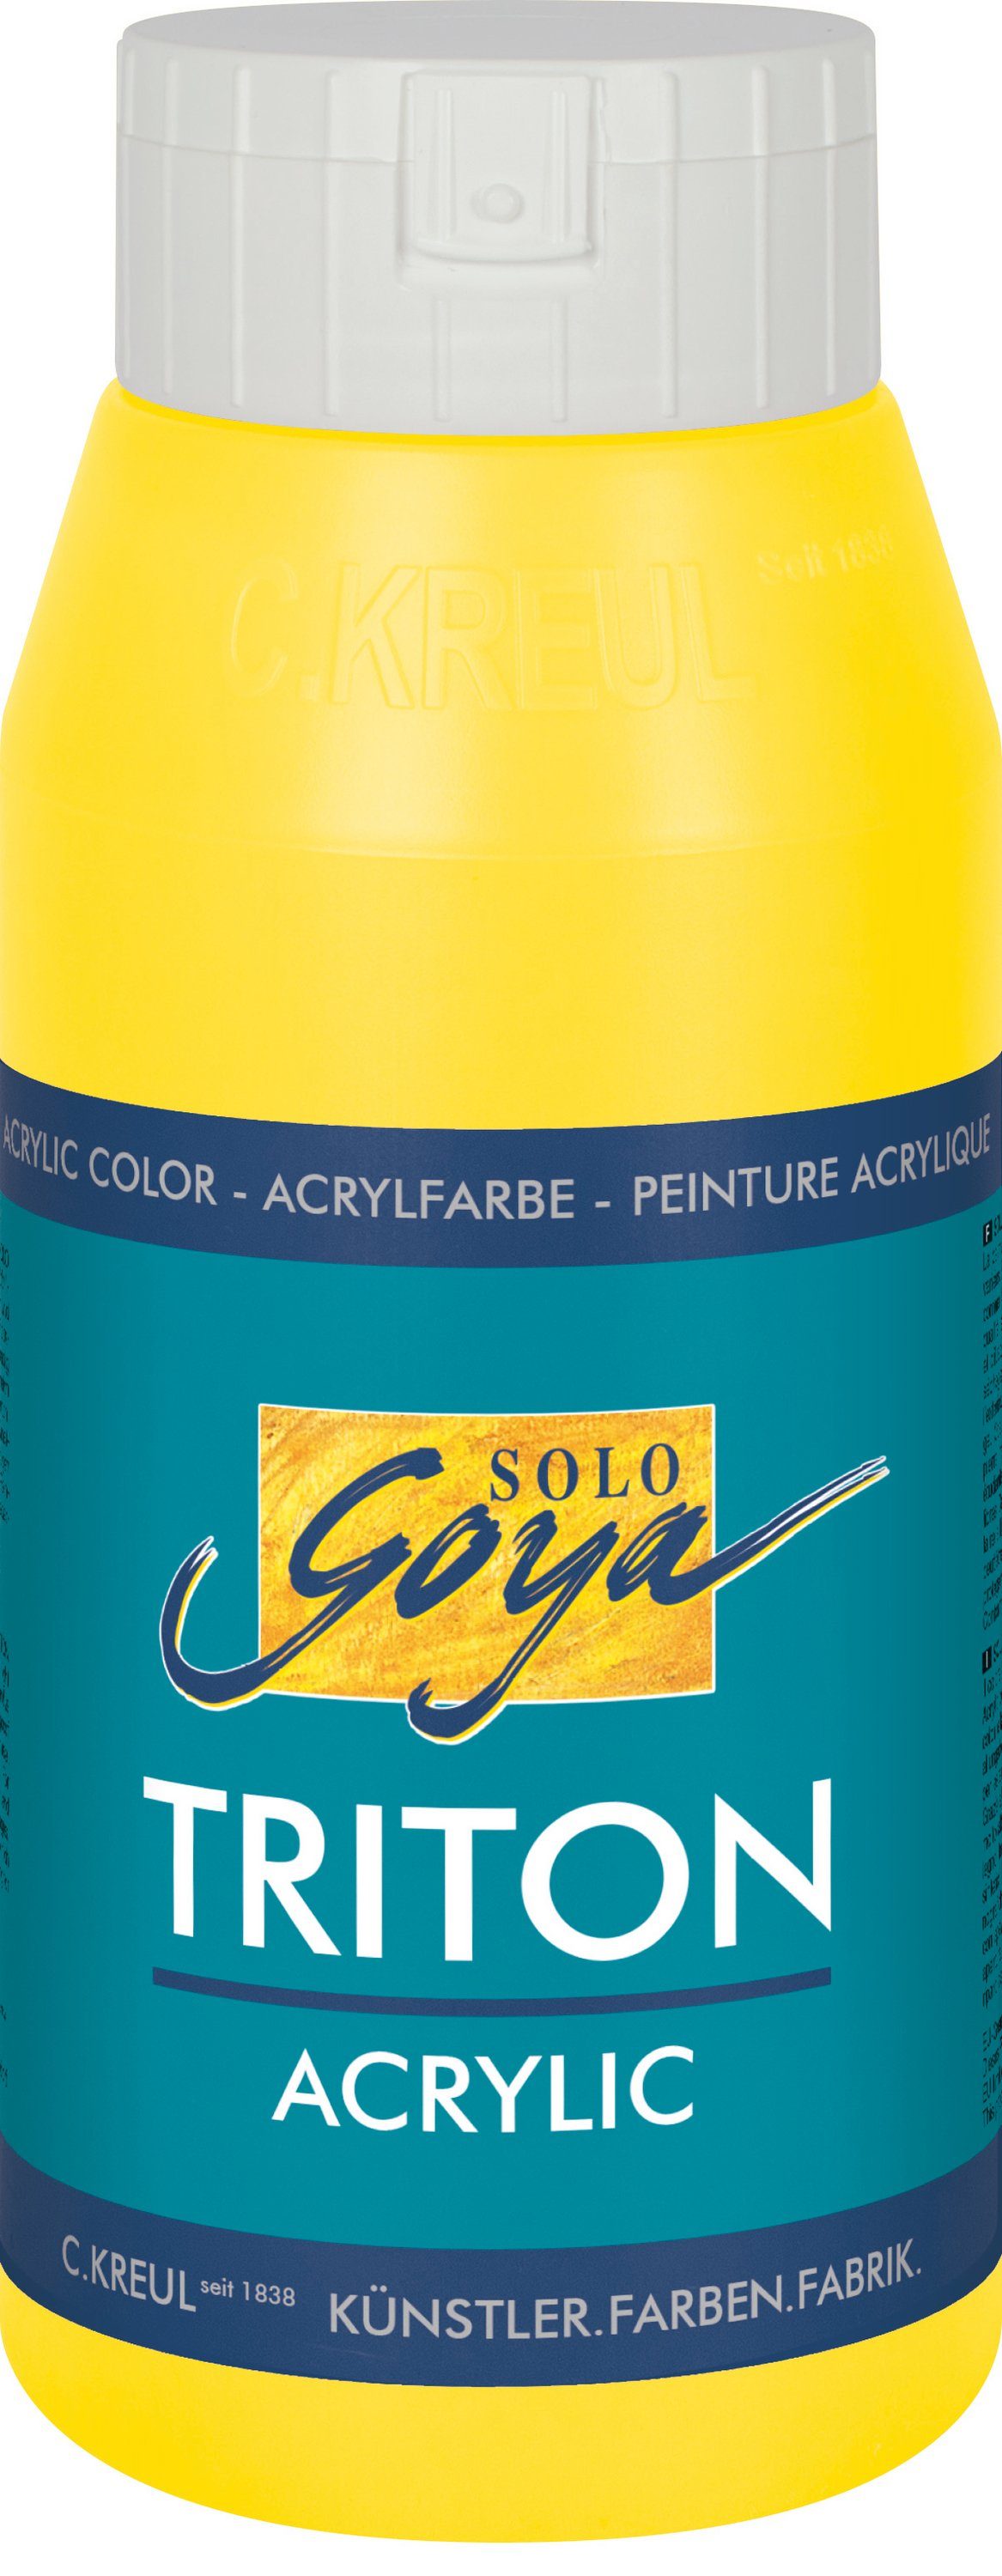 Kreul Acrylfarbe Solo Echtgelb-Hell Goya 750 Acrylic, Triton ml